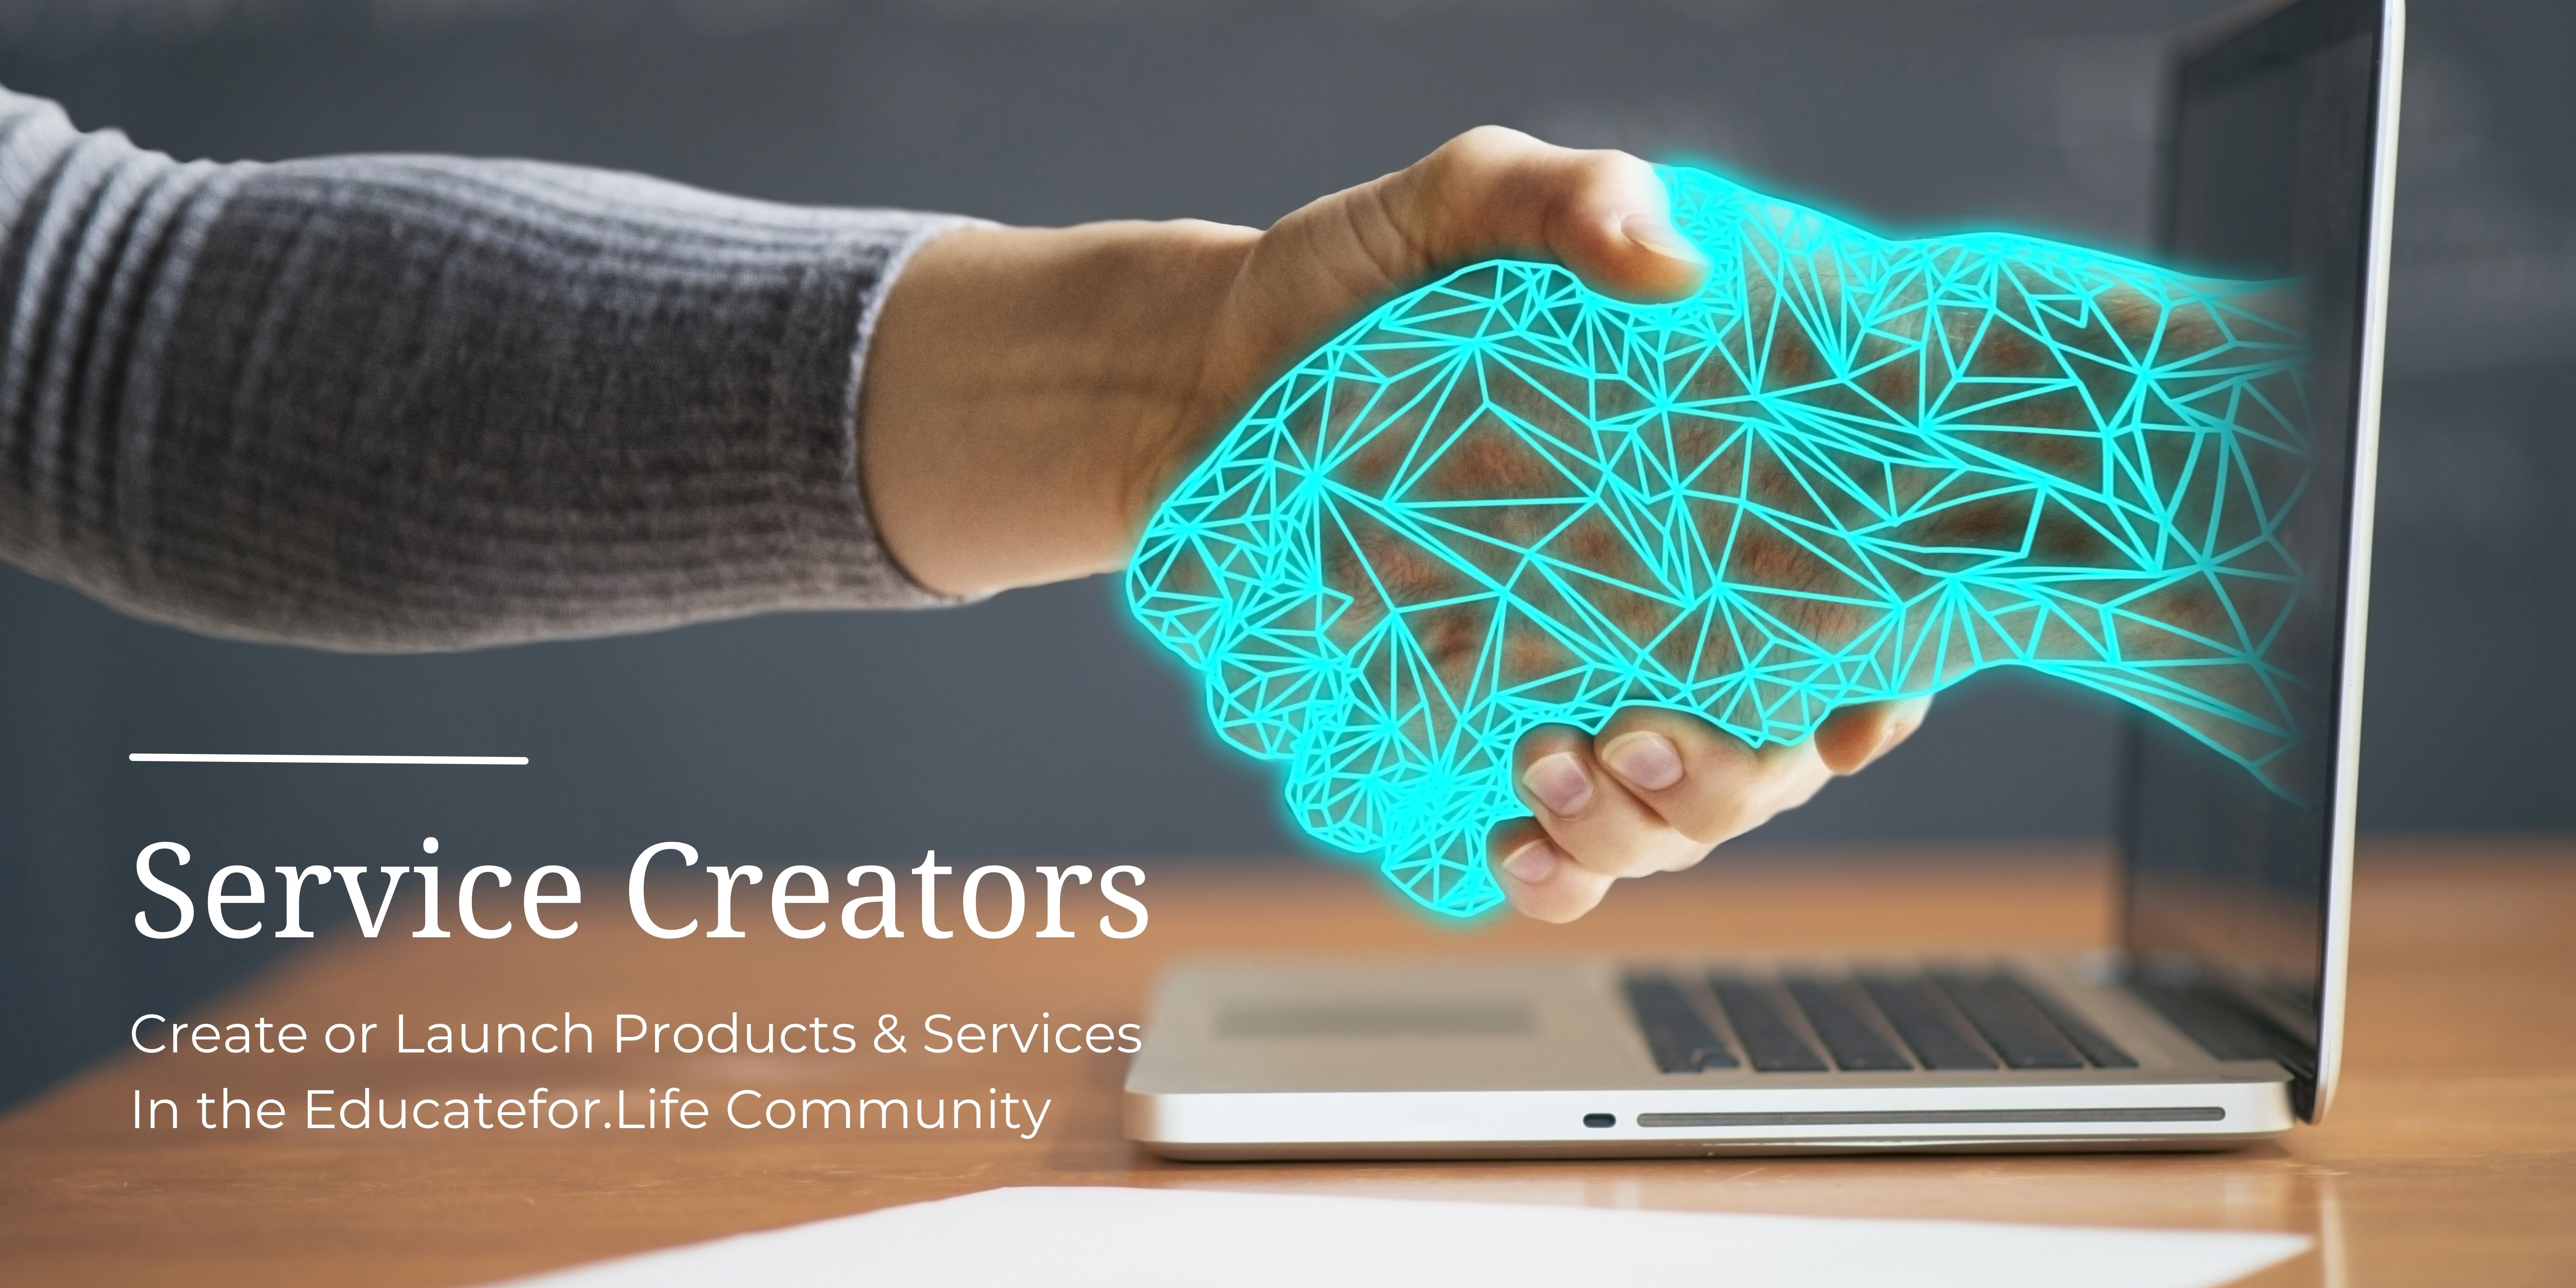 Service Creators